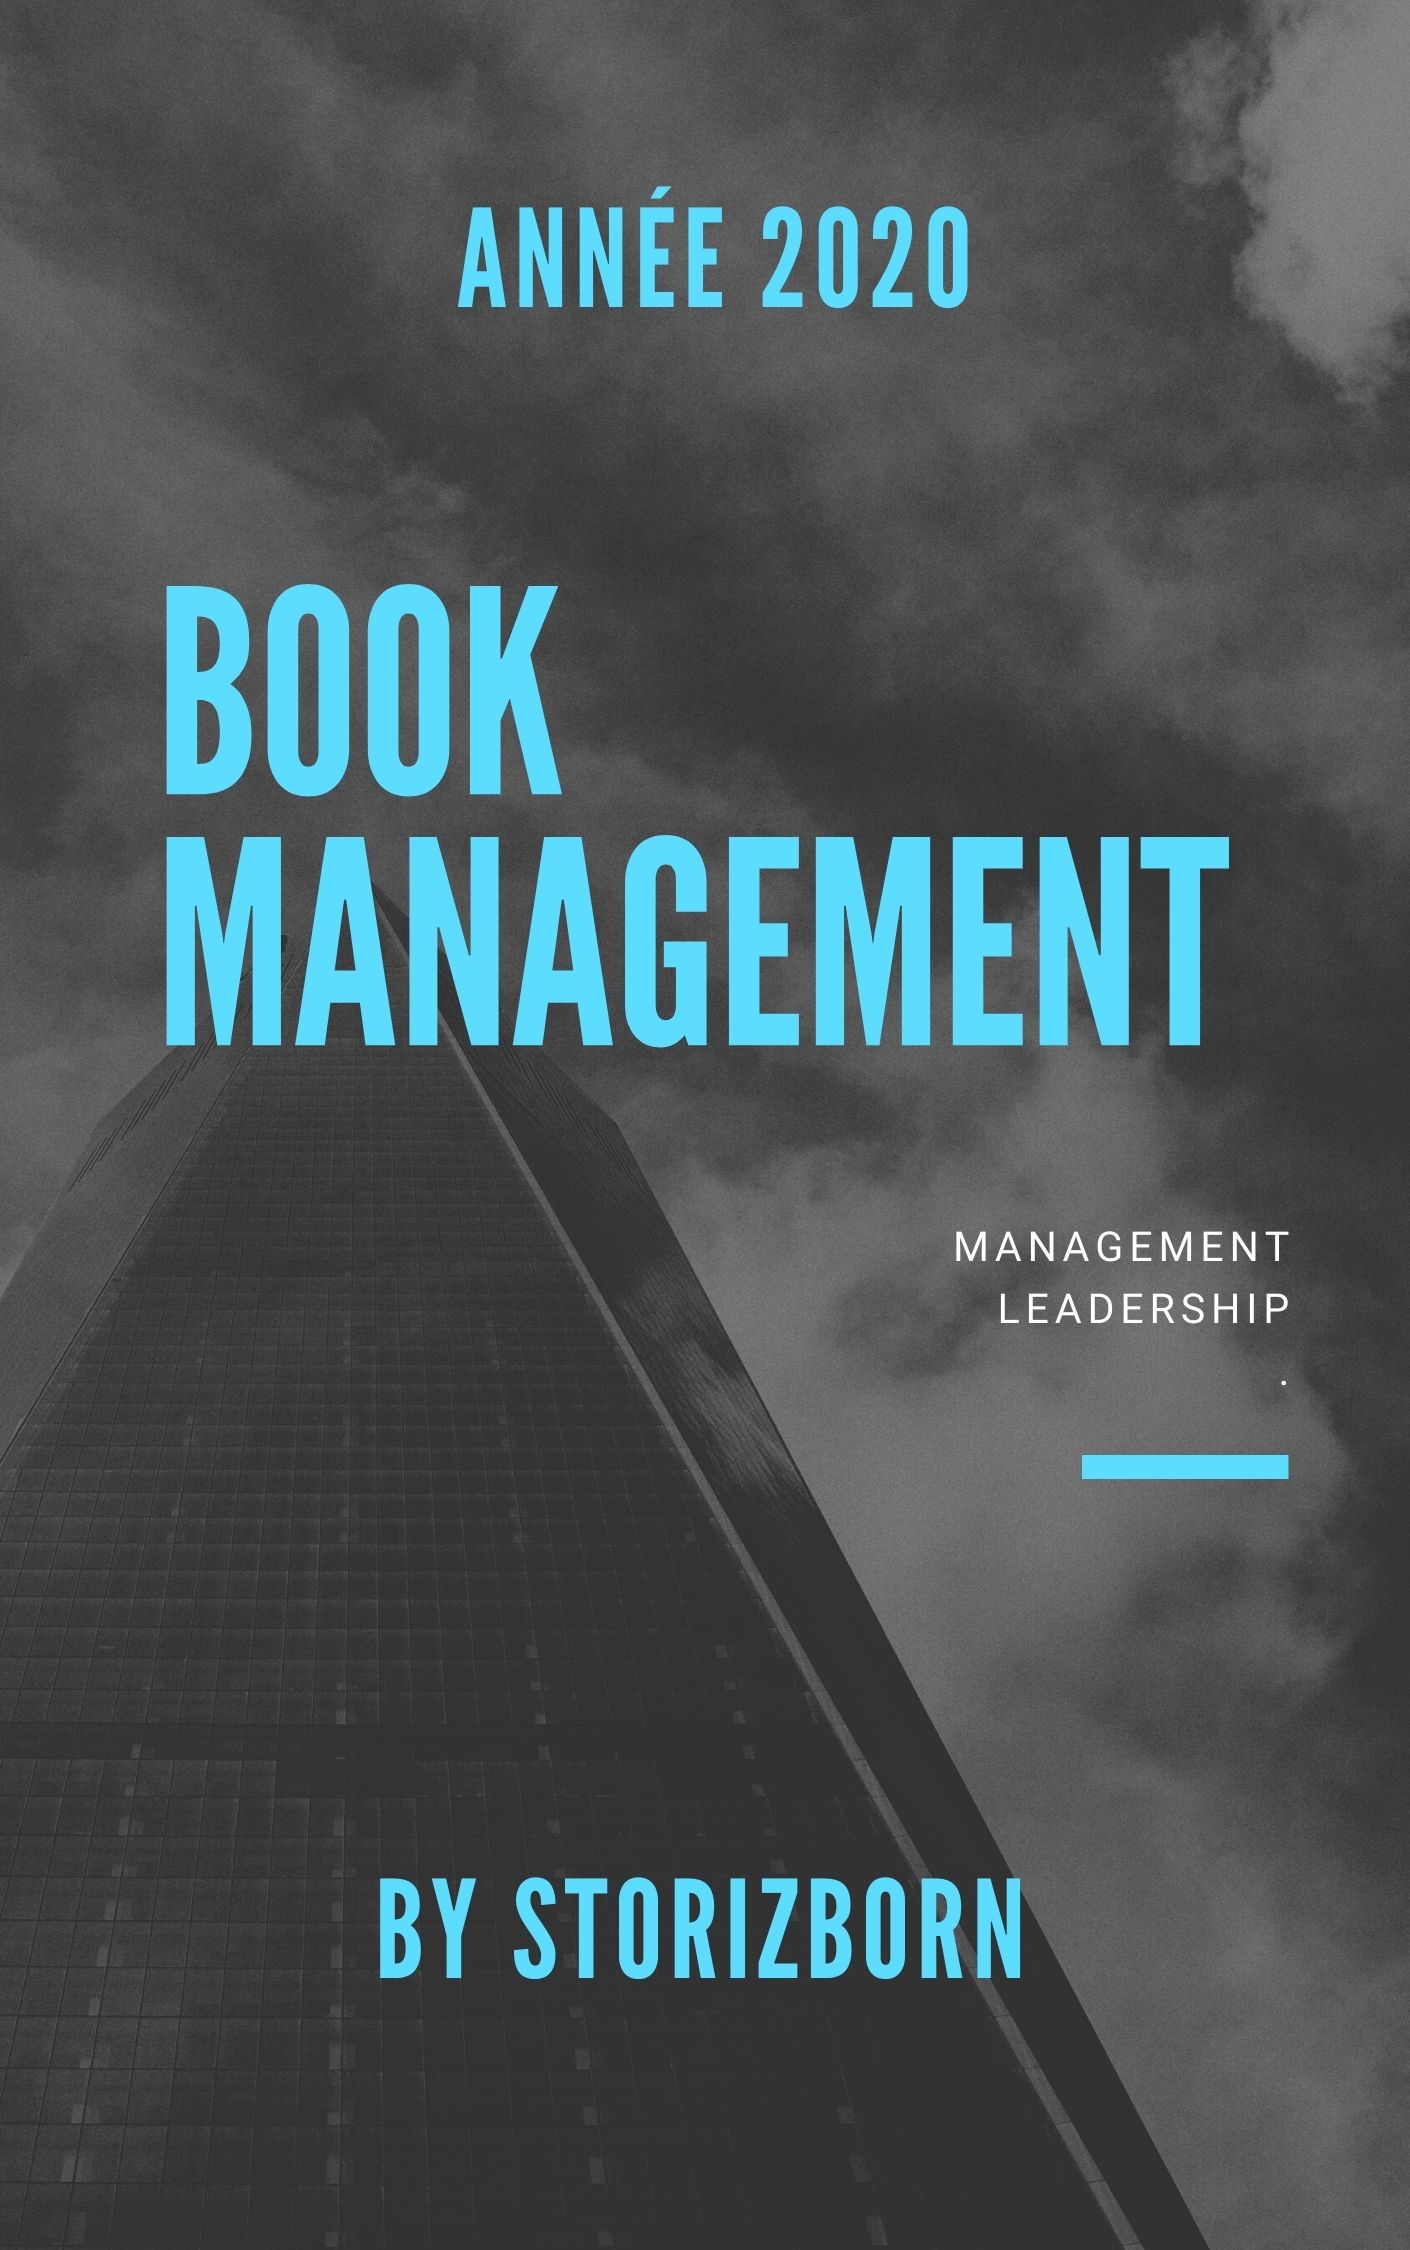  Book management 2020